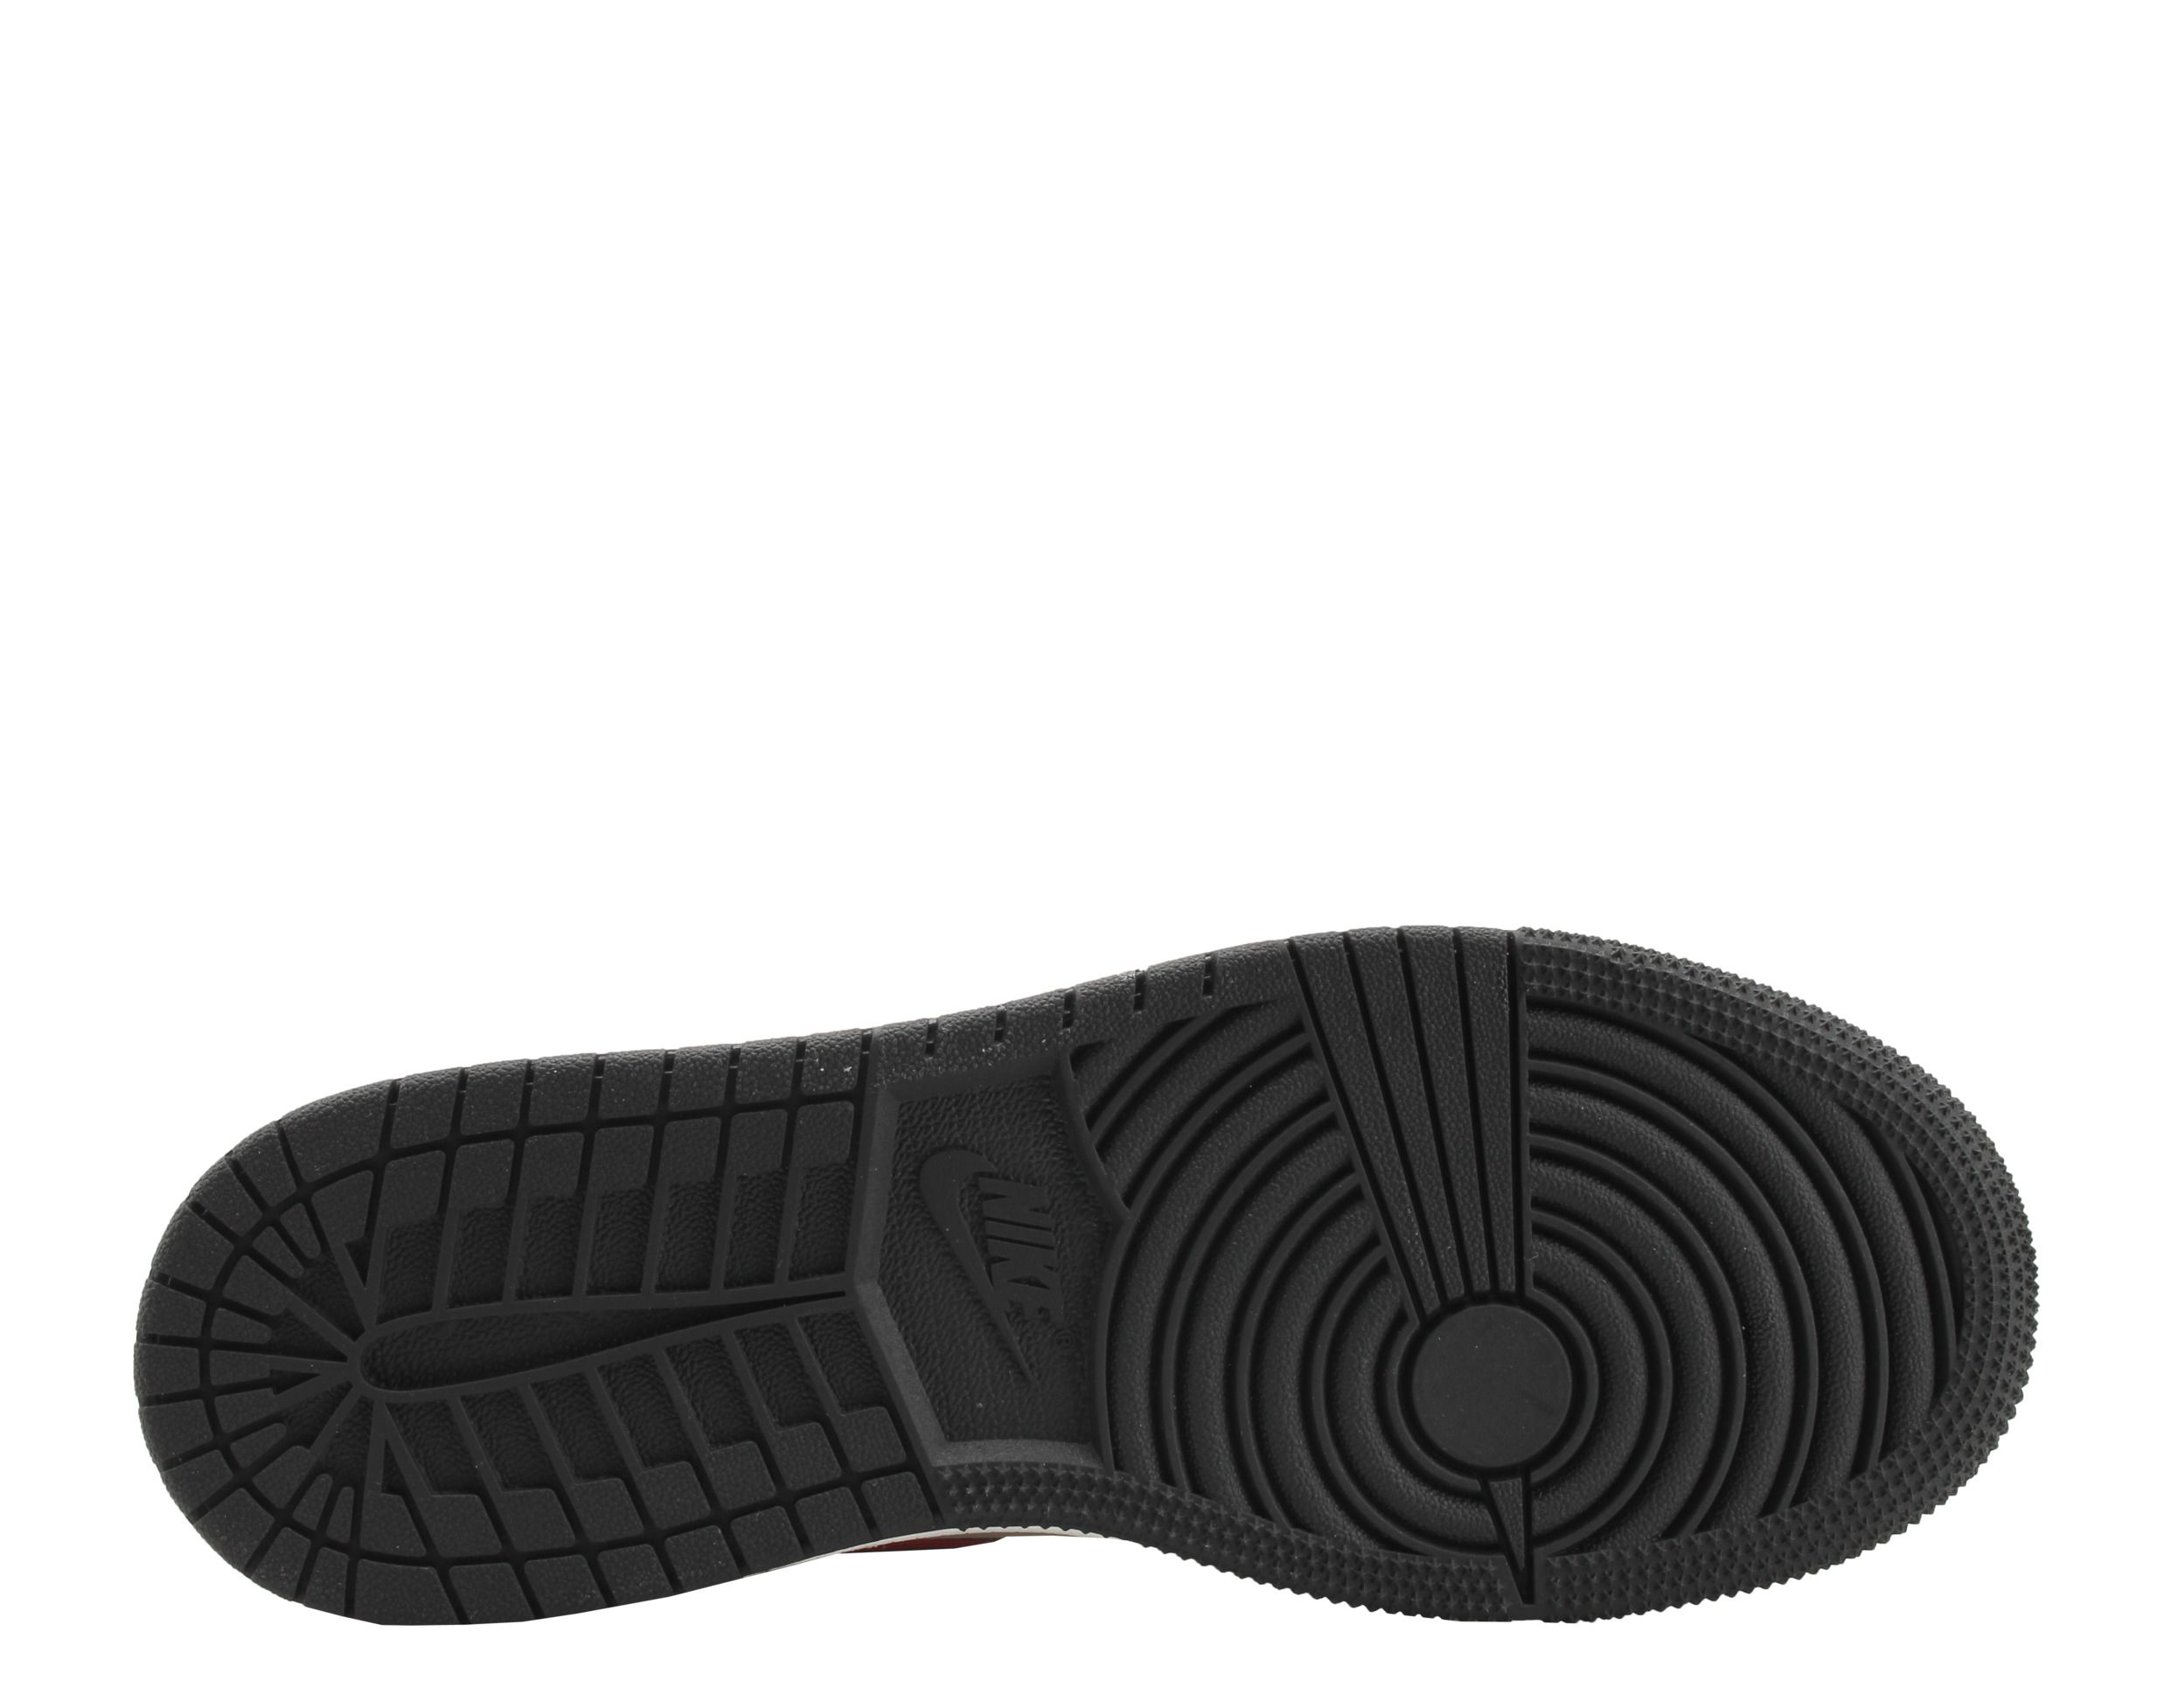 Nike Air Jordan 1 Retro High OG GS Big Kids Basketball Shoes Size 6.5 - image 5 of 6